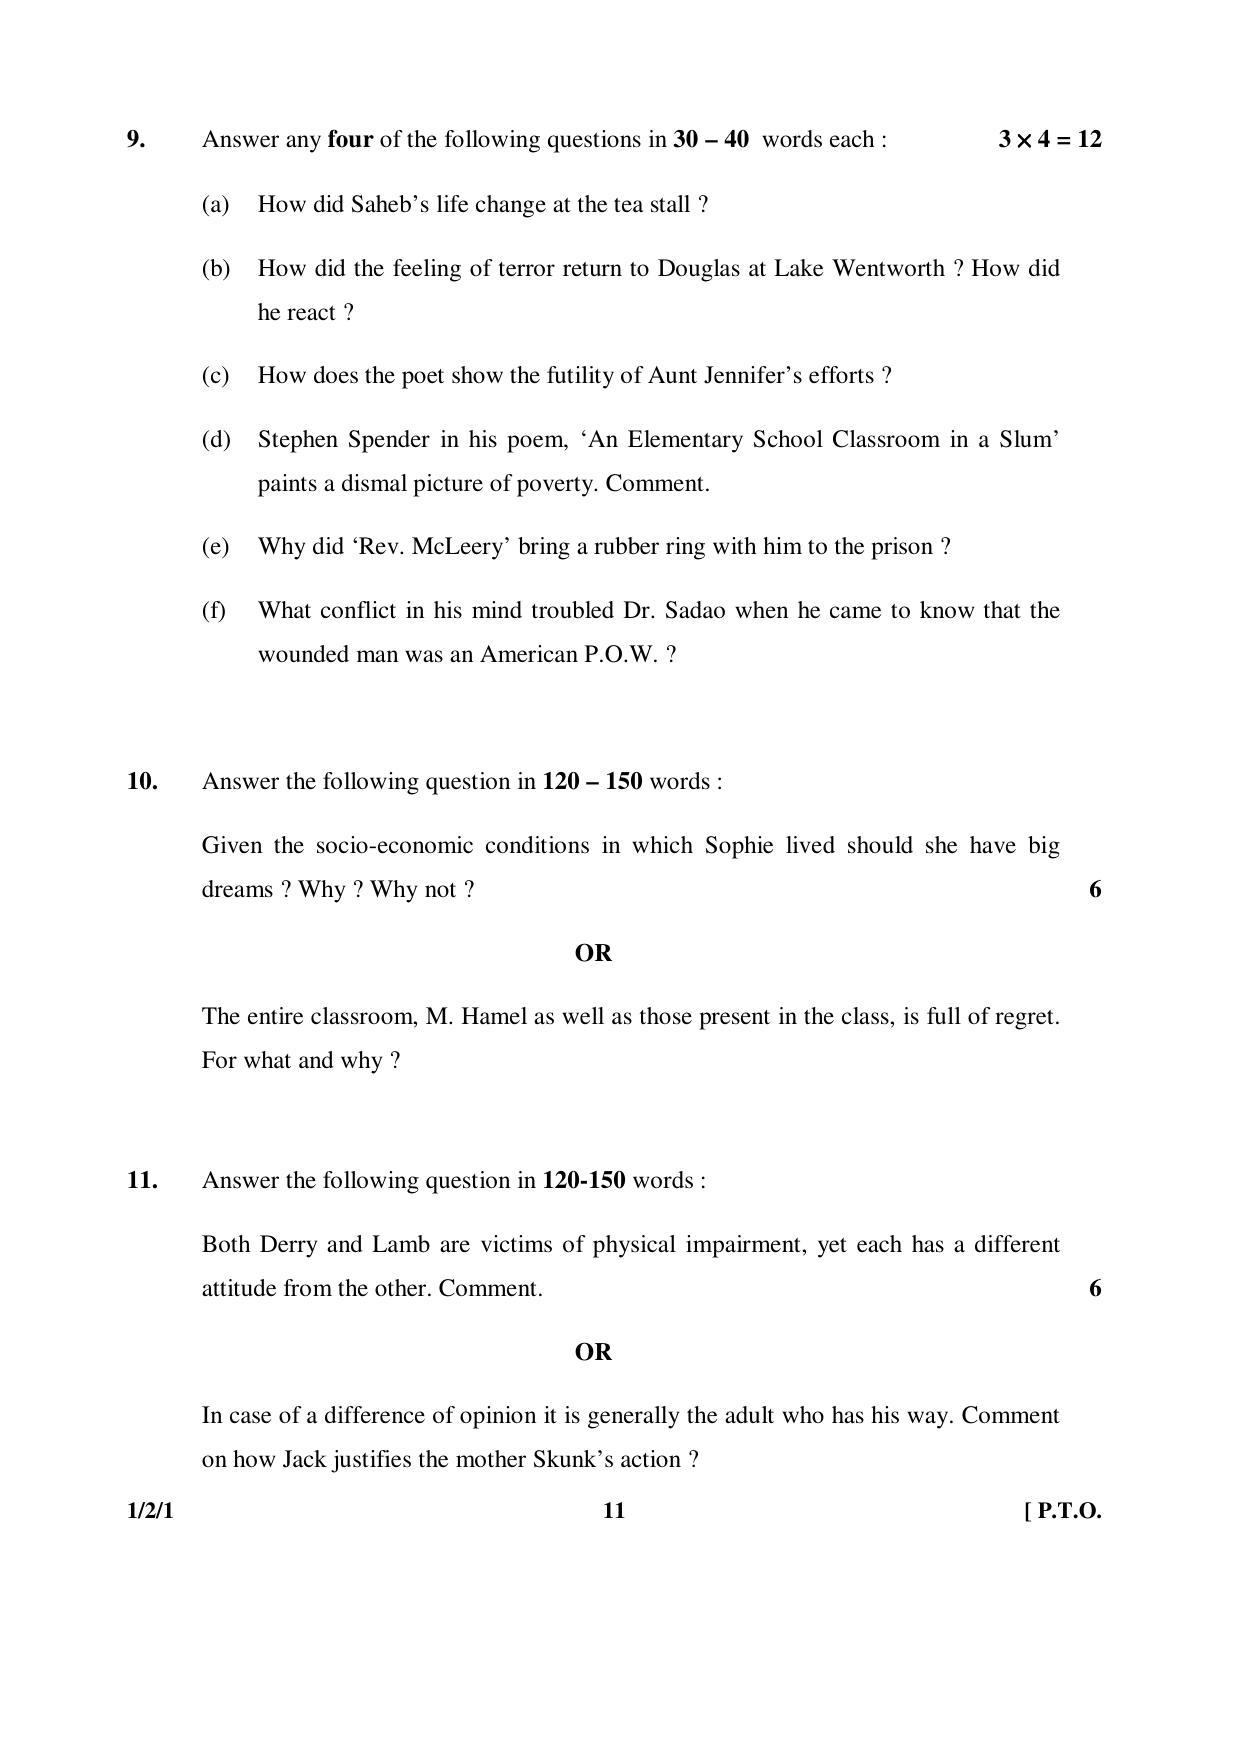 CBSE Class 12 1-2-1 ENGLISH CORE 2016 Question Paper - Page 11